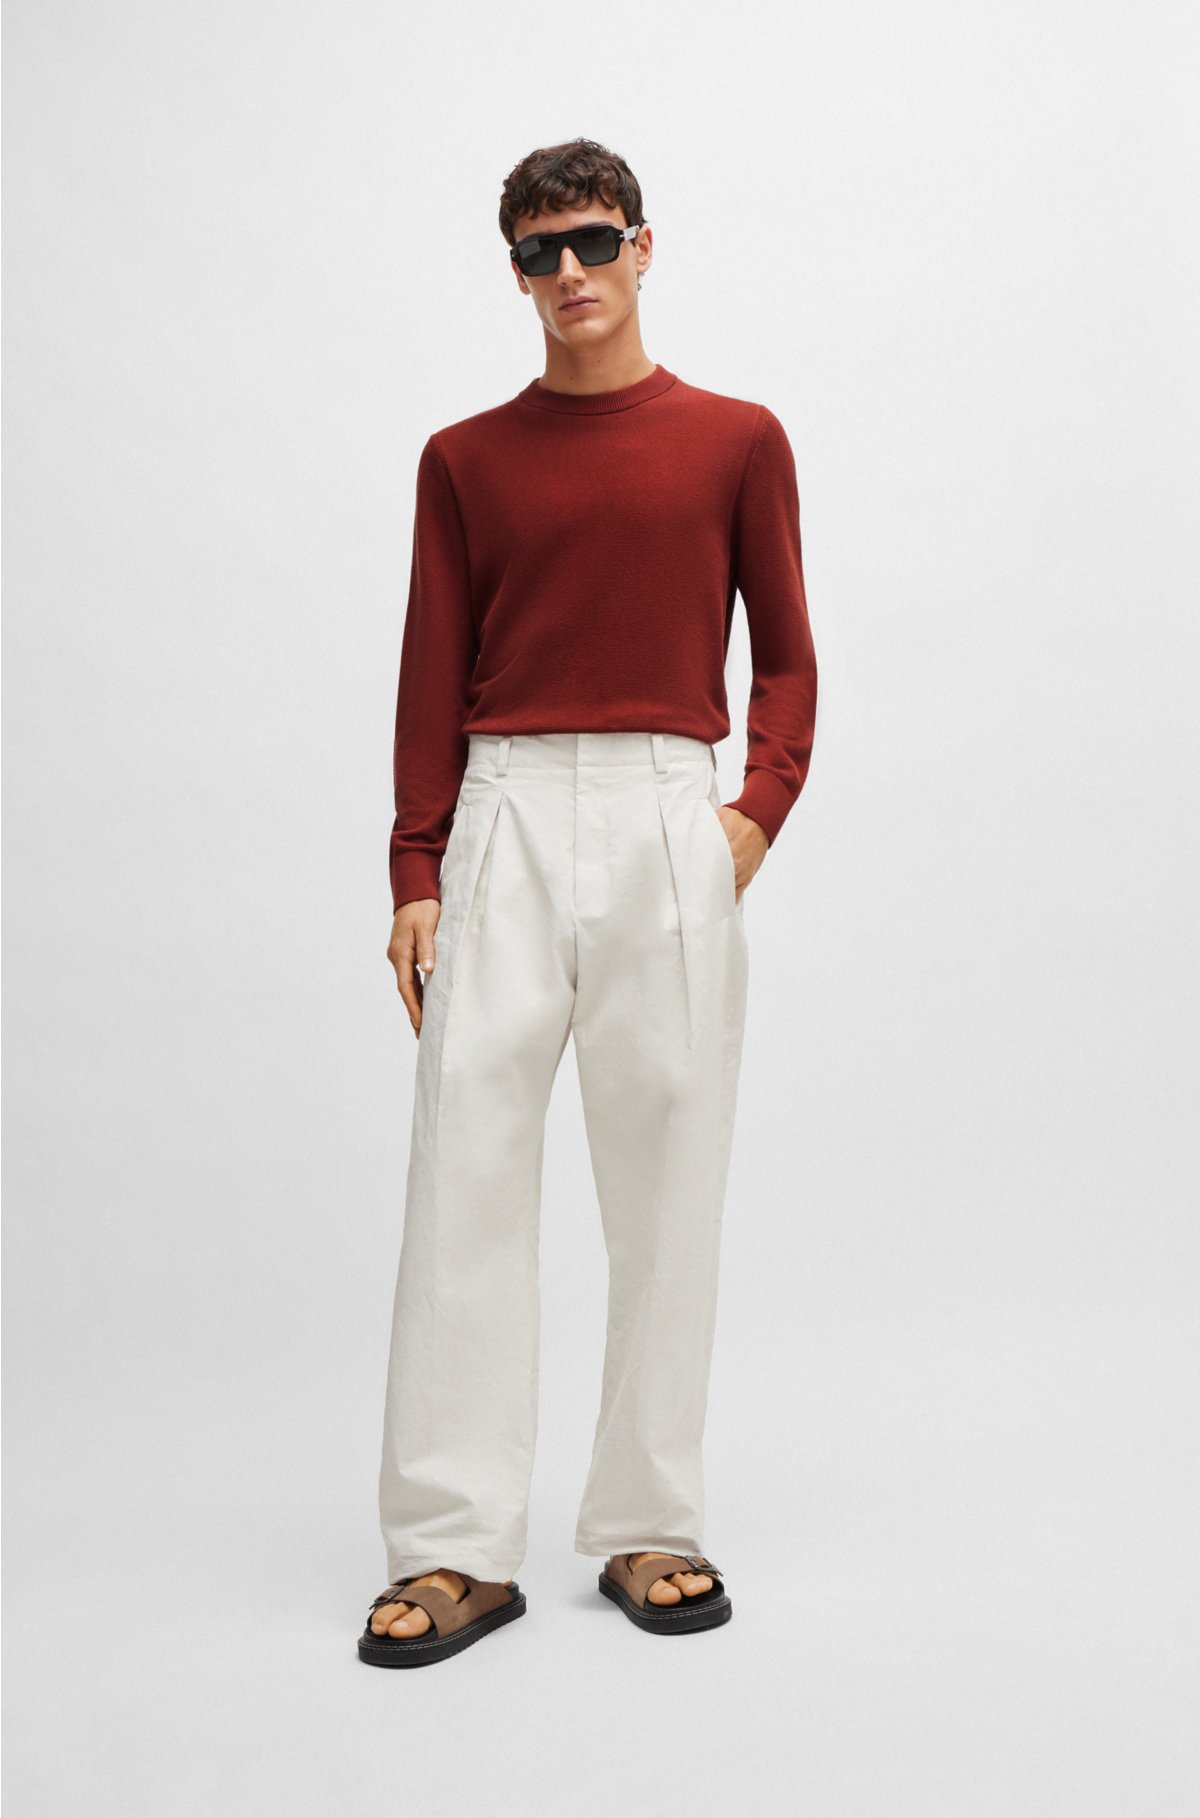 Micro-structured crew-neck sweater in cotton, Dark Red